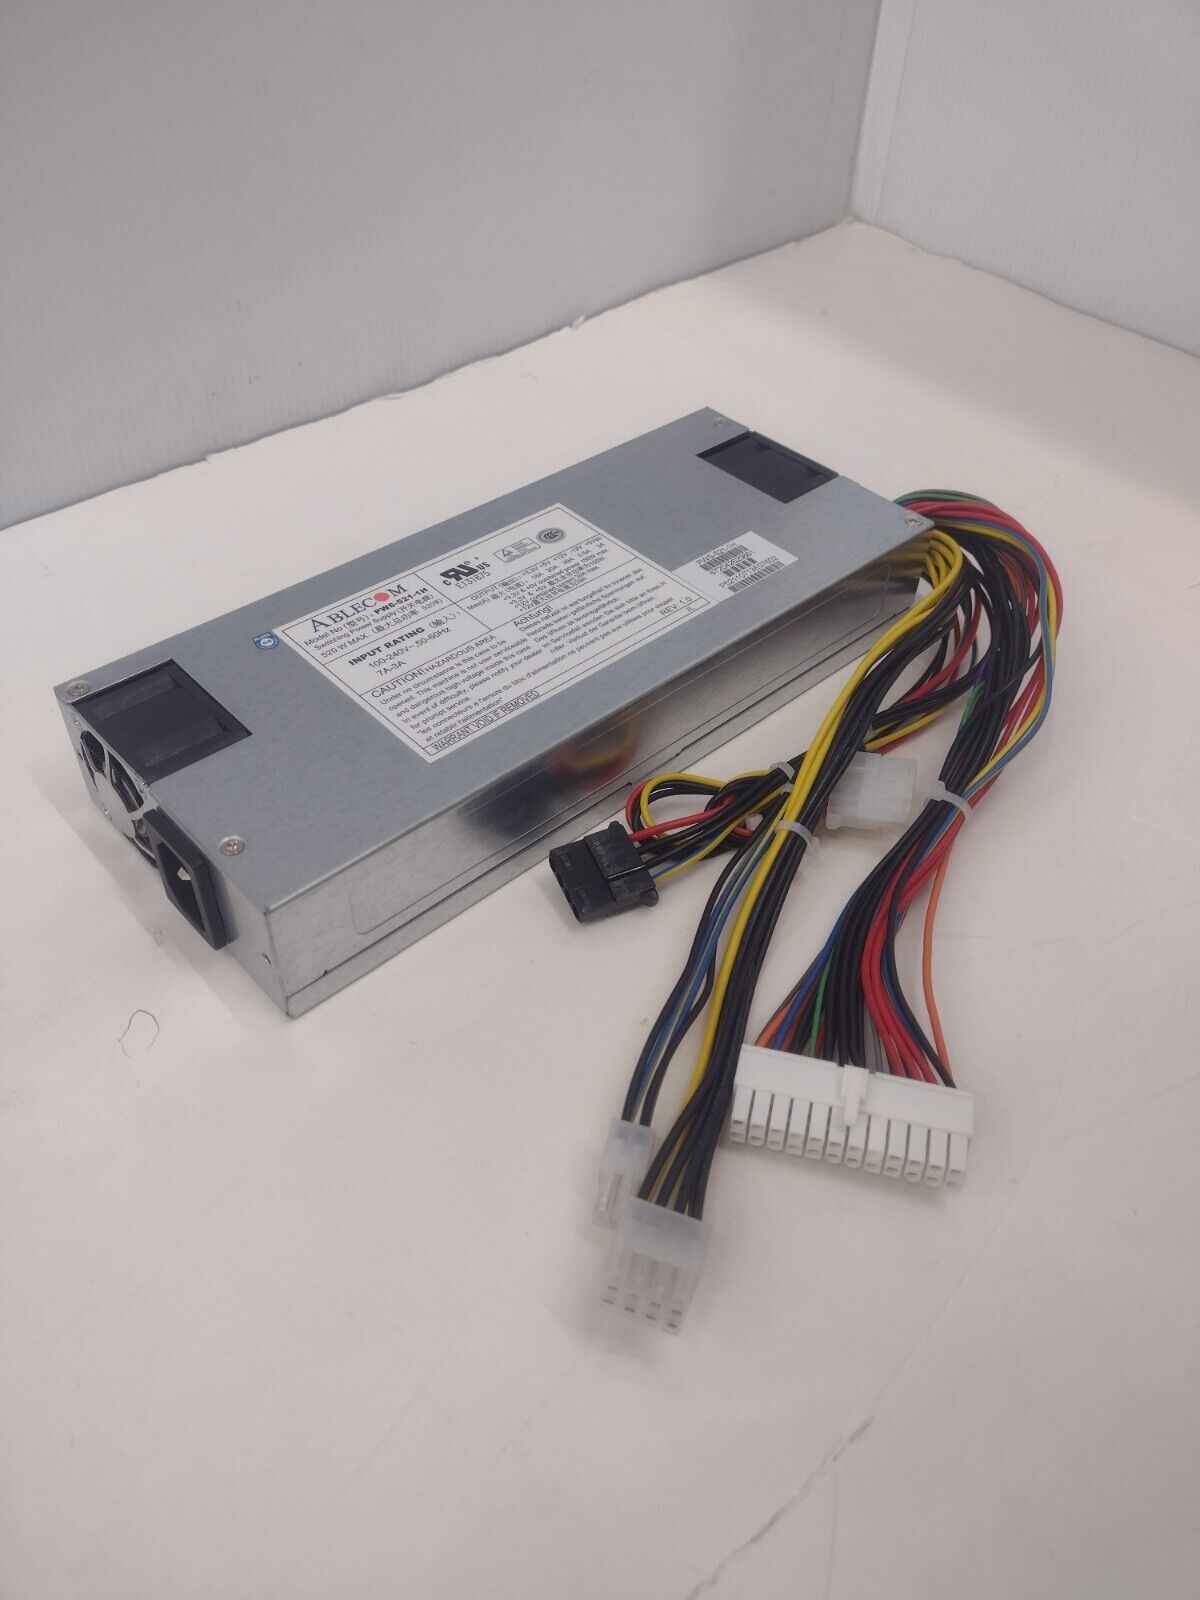 Ablecom Supermicro PWS-521-1H 520W 1U Switching Server Power Supply